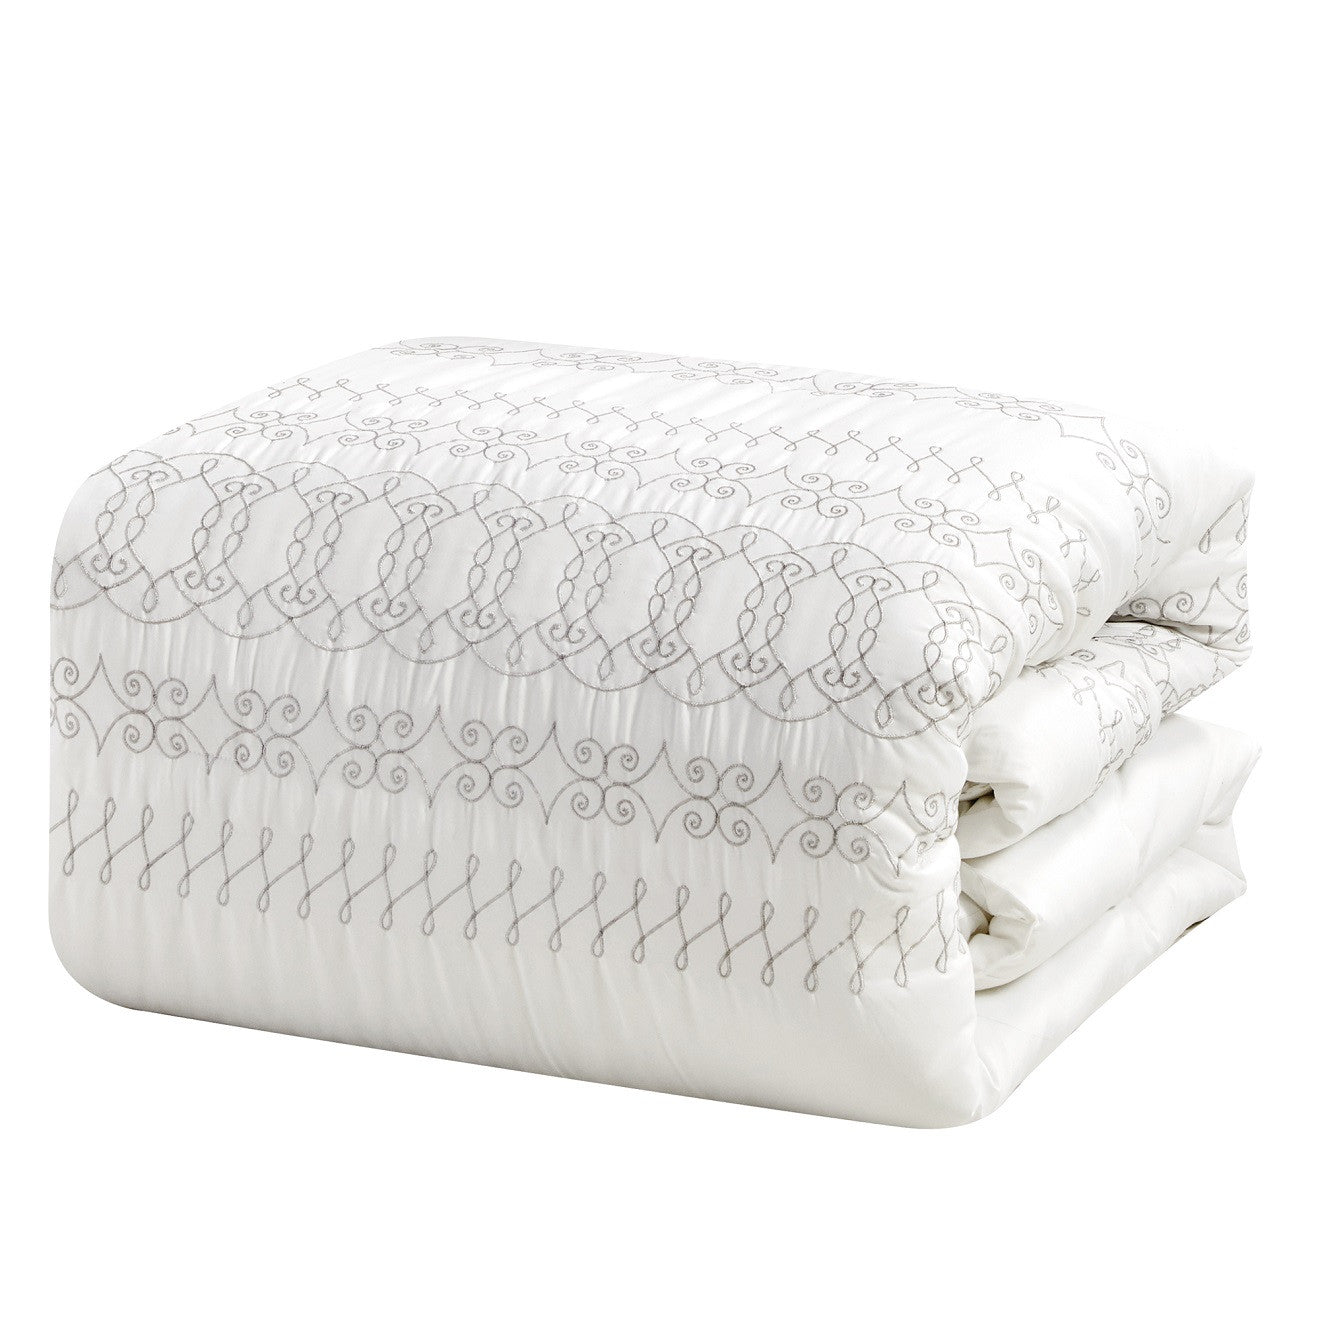 Plush White Comforter set, seven pieces